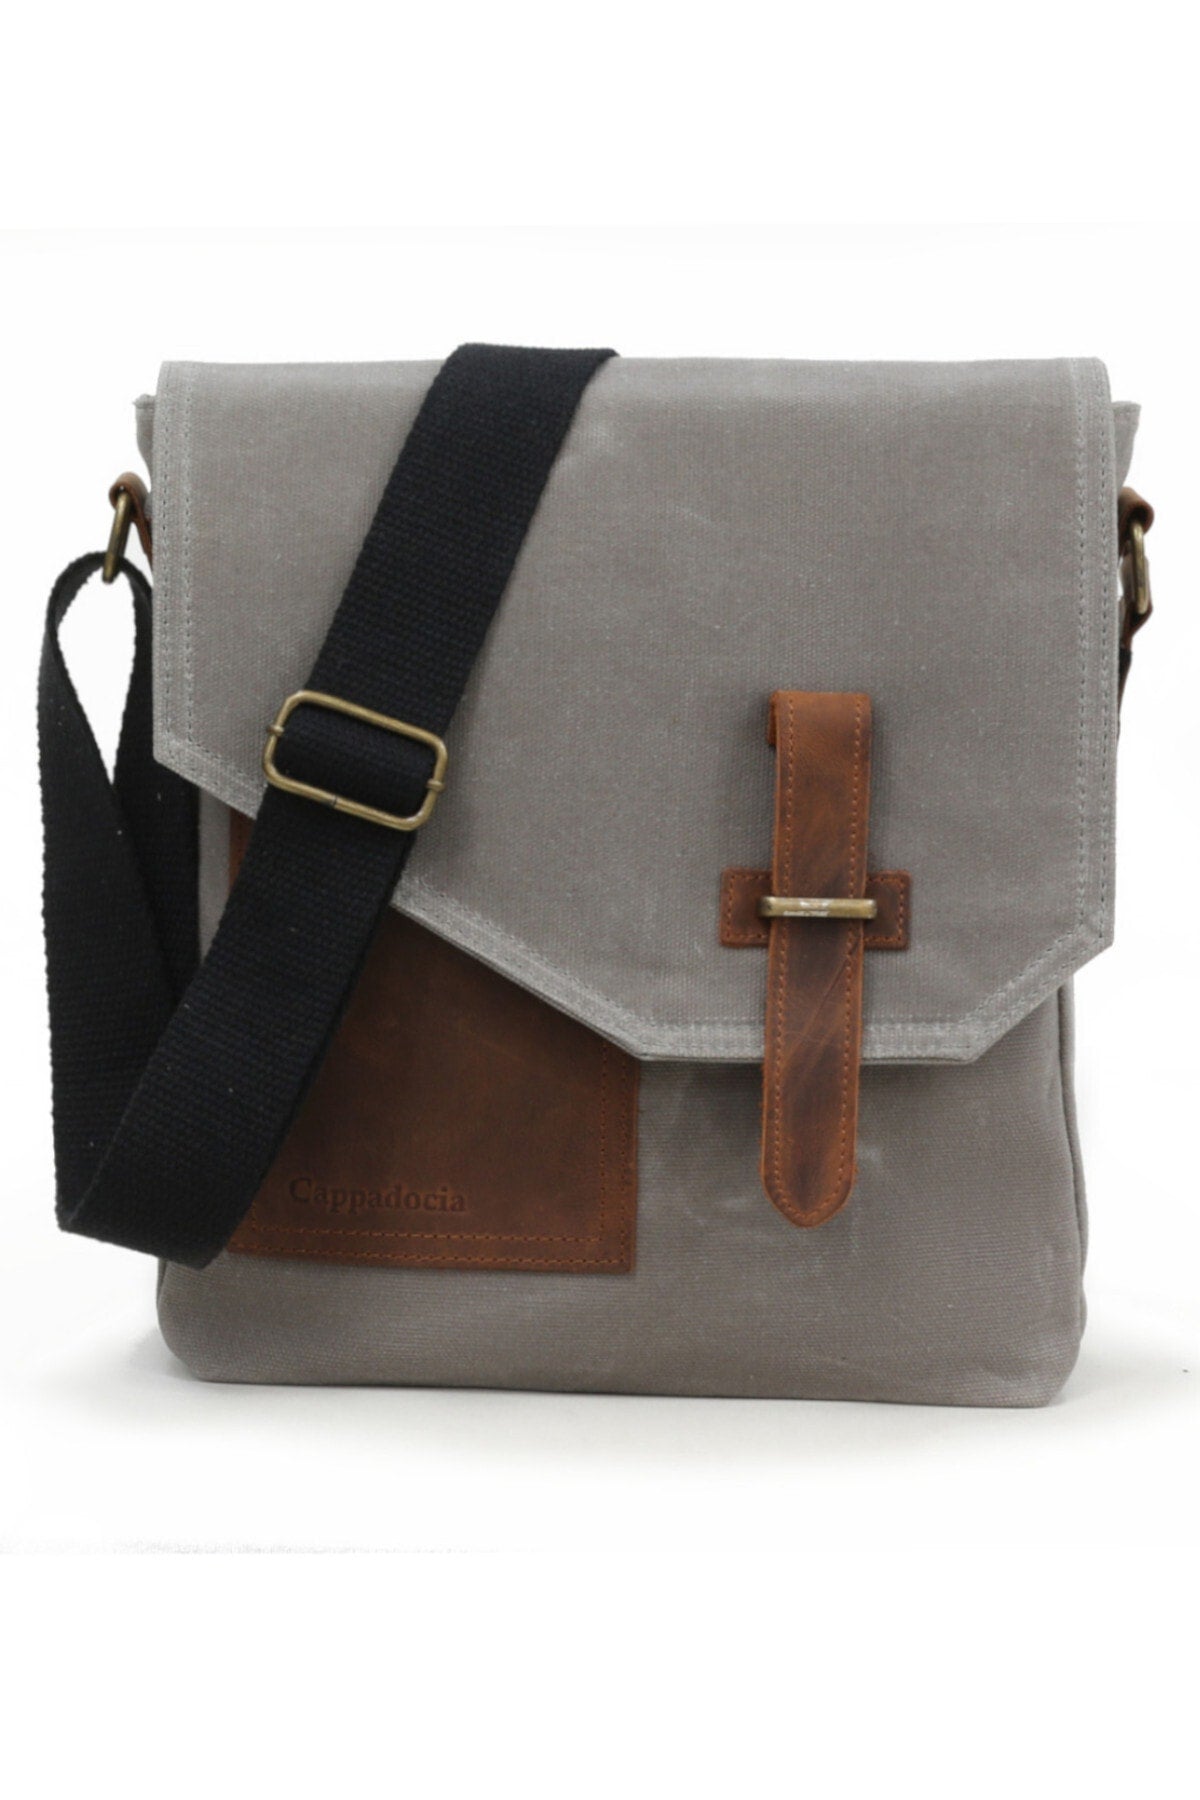 Cappadocia Genuine Leather 4035 Teos Waterproof Gray Postman Shoulder Waxed Canvas Laptop Bag